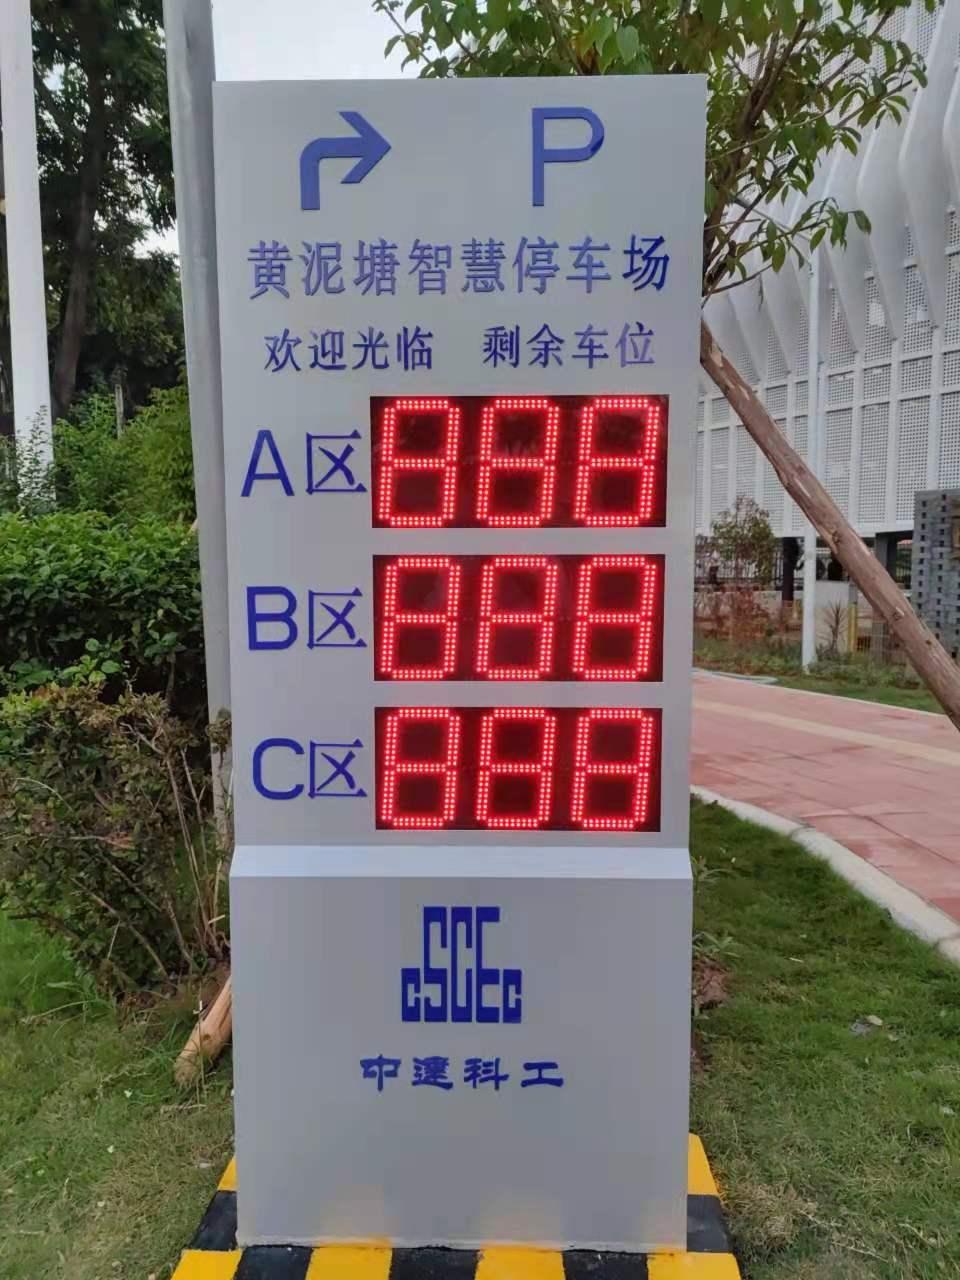 Excelsoo Case of Huangnitang Smart Rotary Parking LPR Guidance System in Zengcheng, Guangzhou